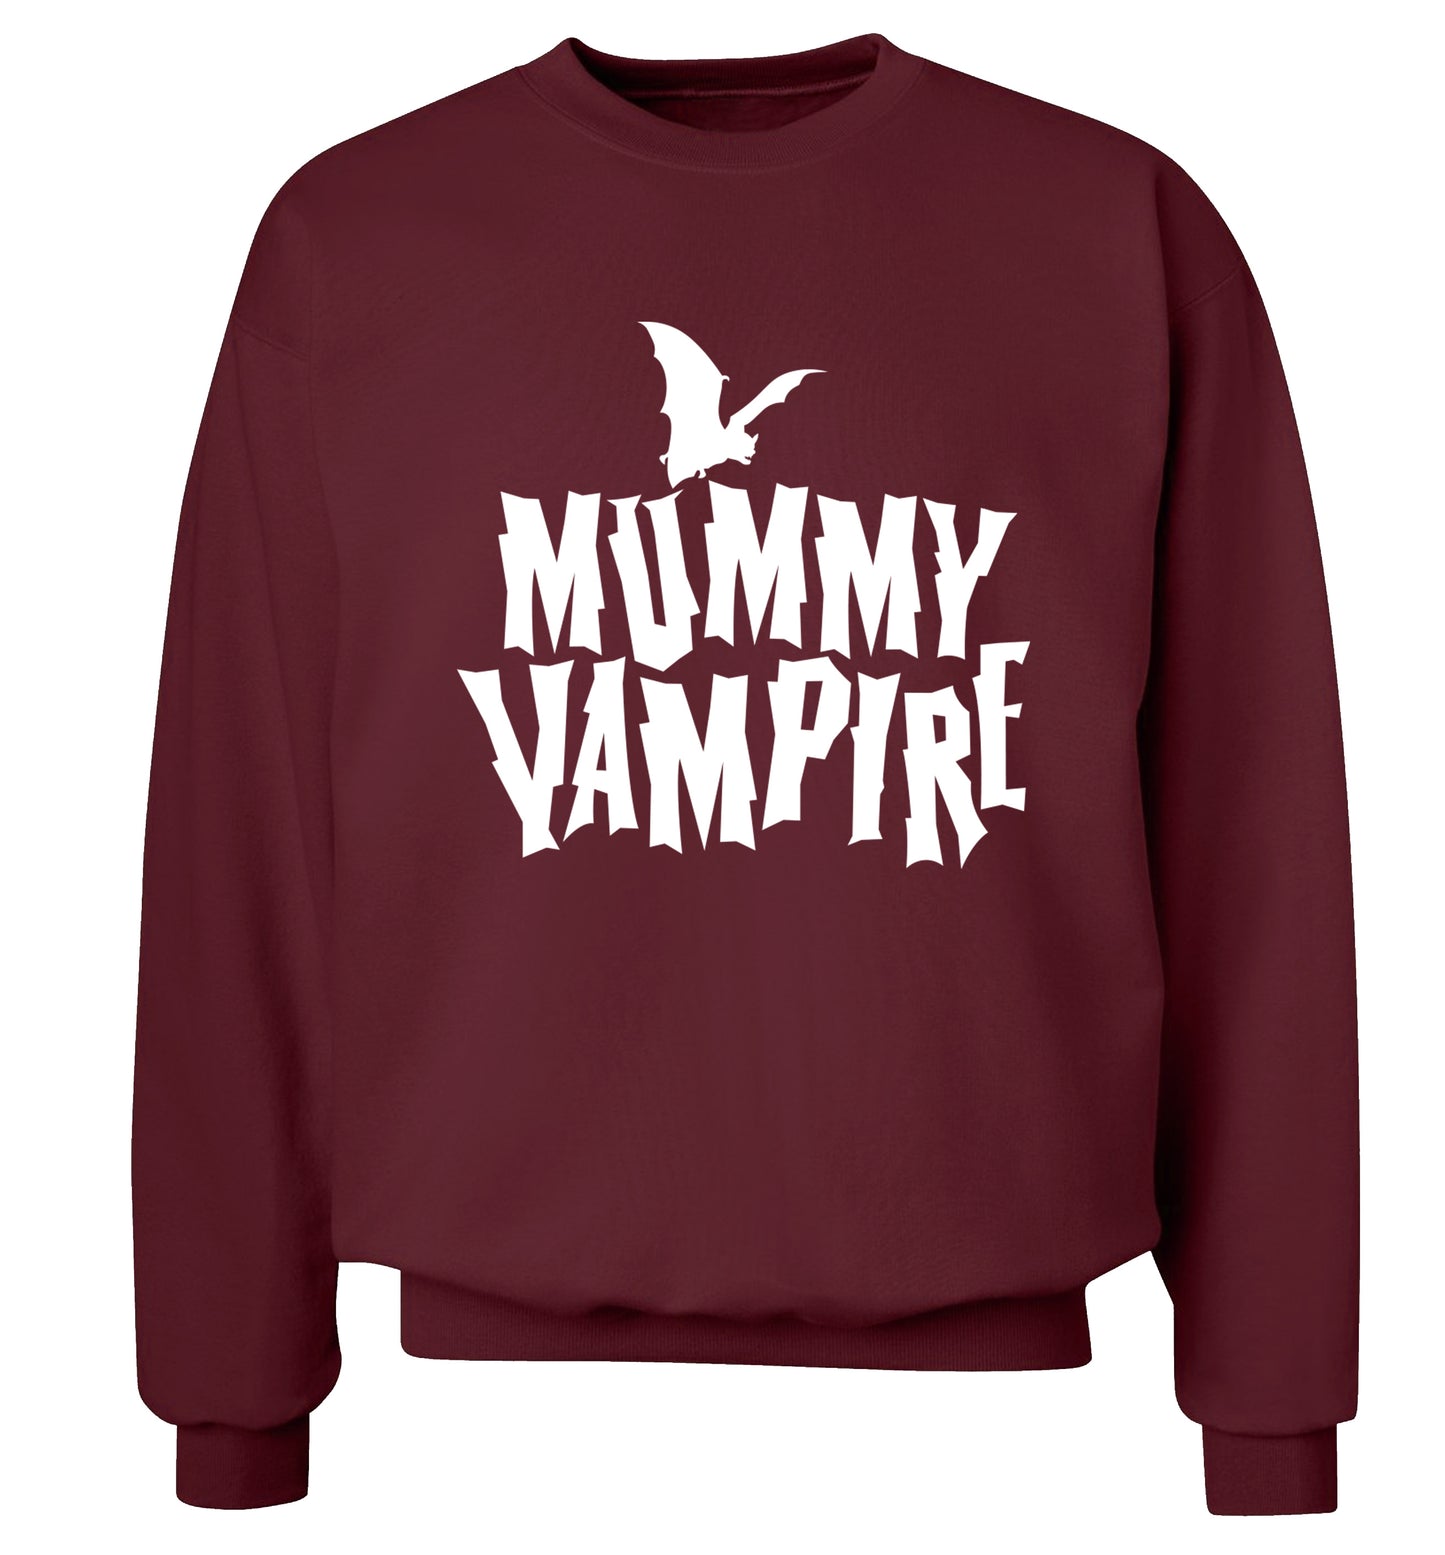 Mummy vampire adult's unisex maroon sweater 2XL